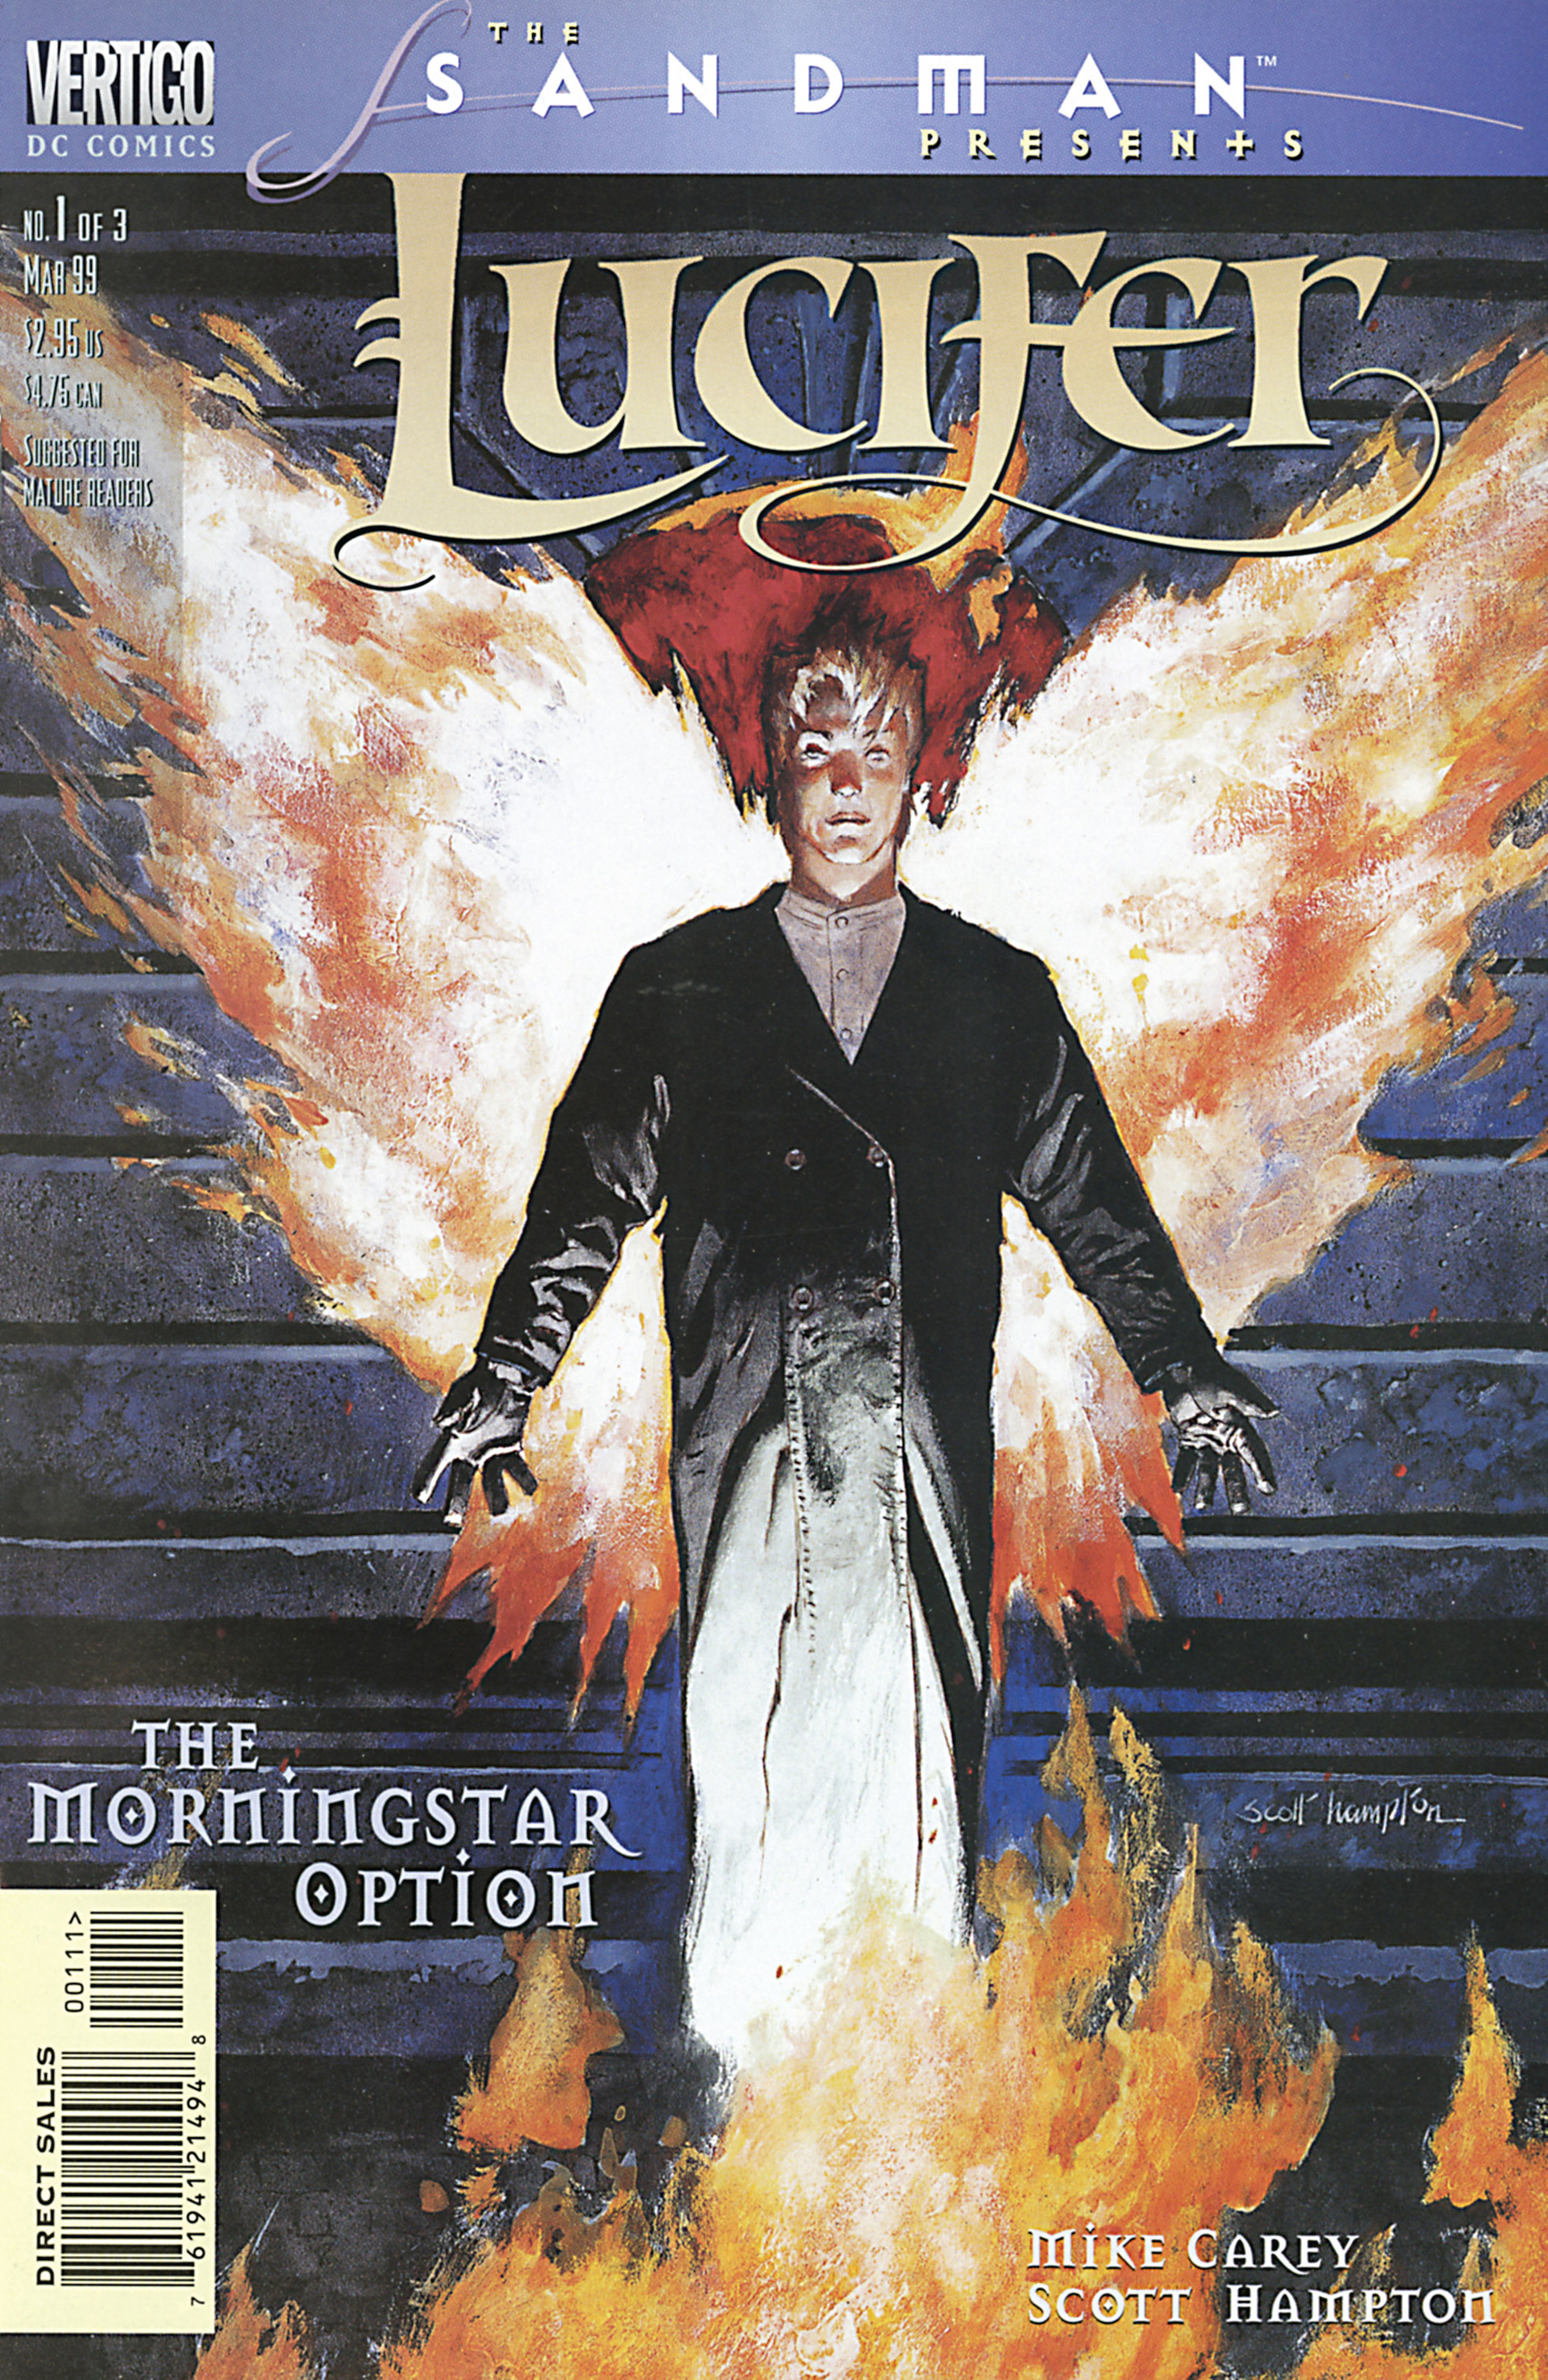 Sandman Presents: Lucifer issue 1 - Page 1